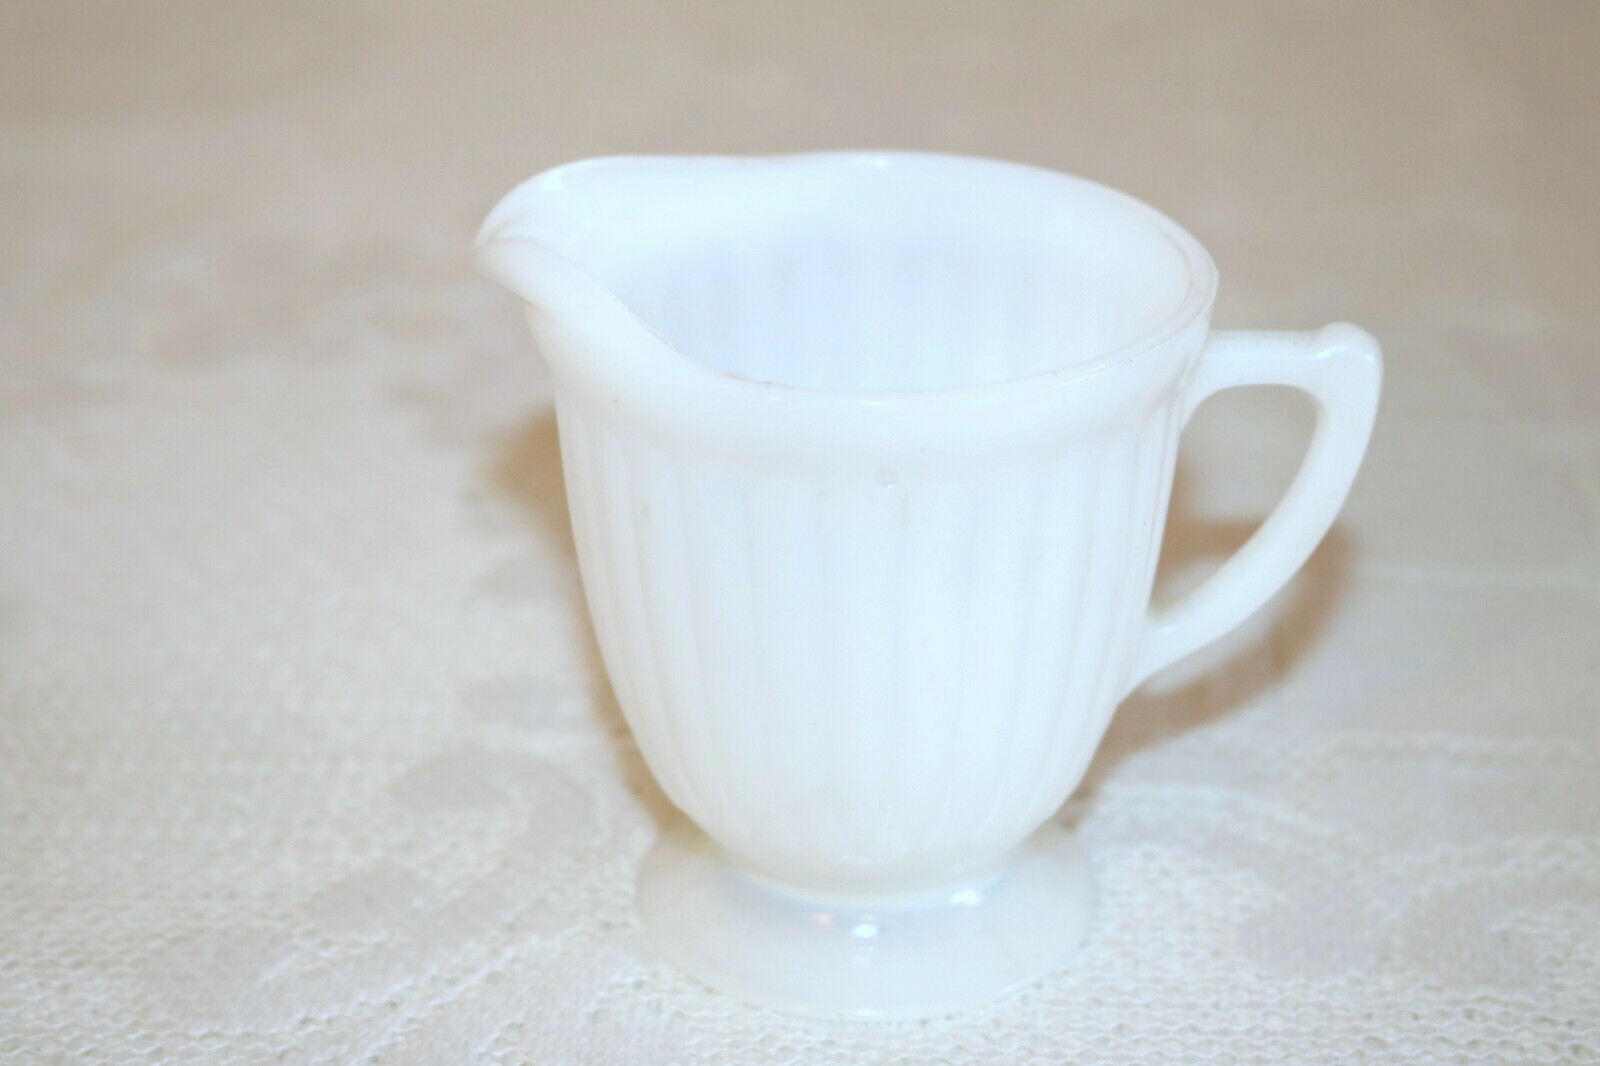 Macbeth-evans Plain Monax White Opaque Petalware Creamer & Open Sugar Bowl